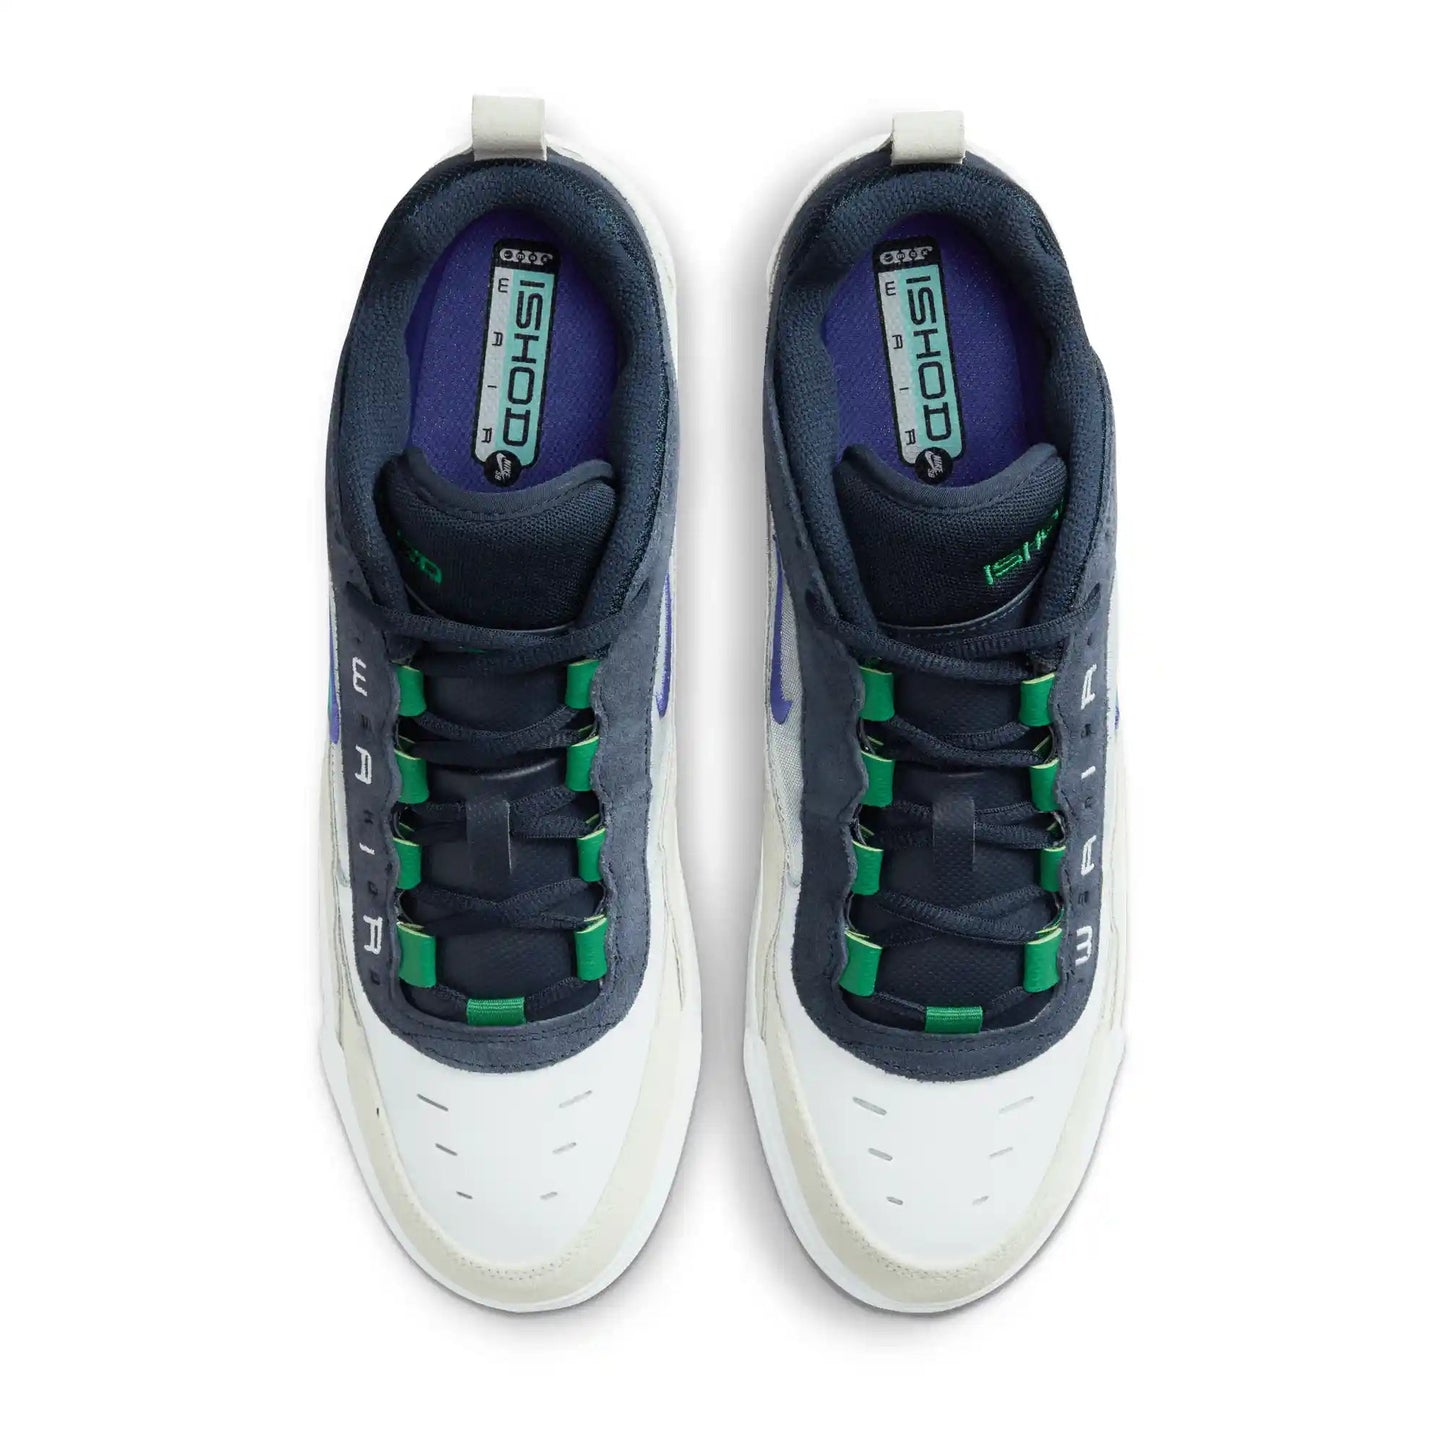 Nike SB Ishod 2, white/persian violet-obsidian-pine green - Tiki Room Skateboards - 5